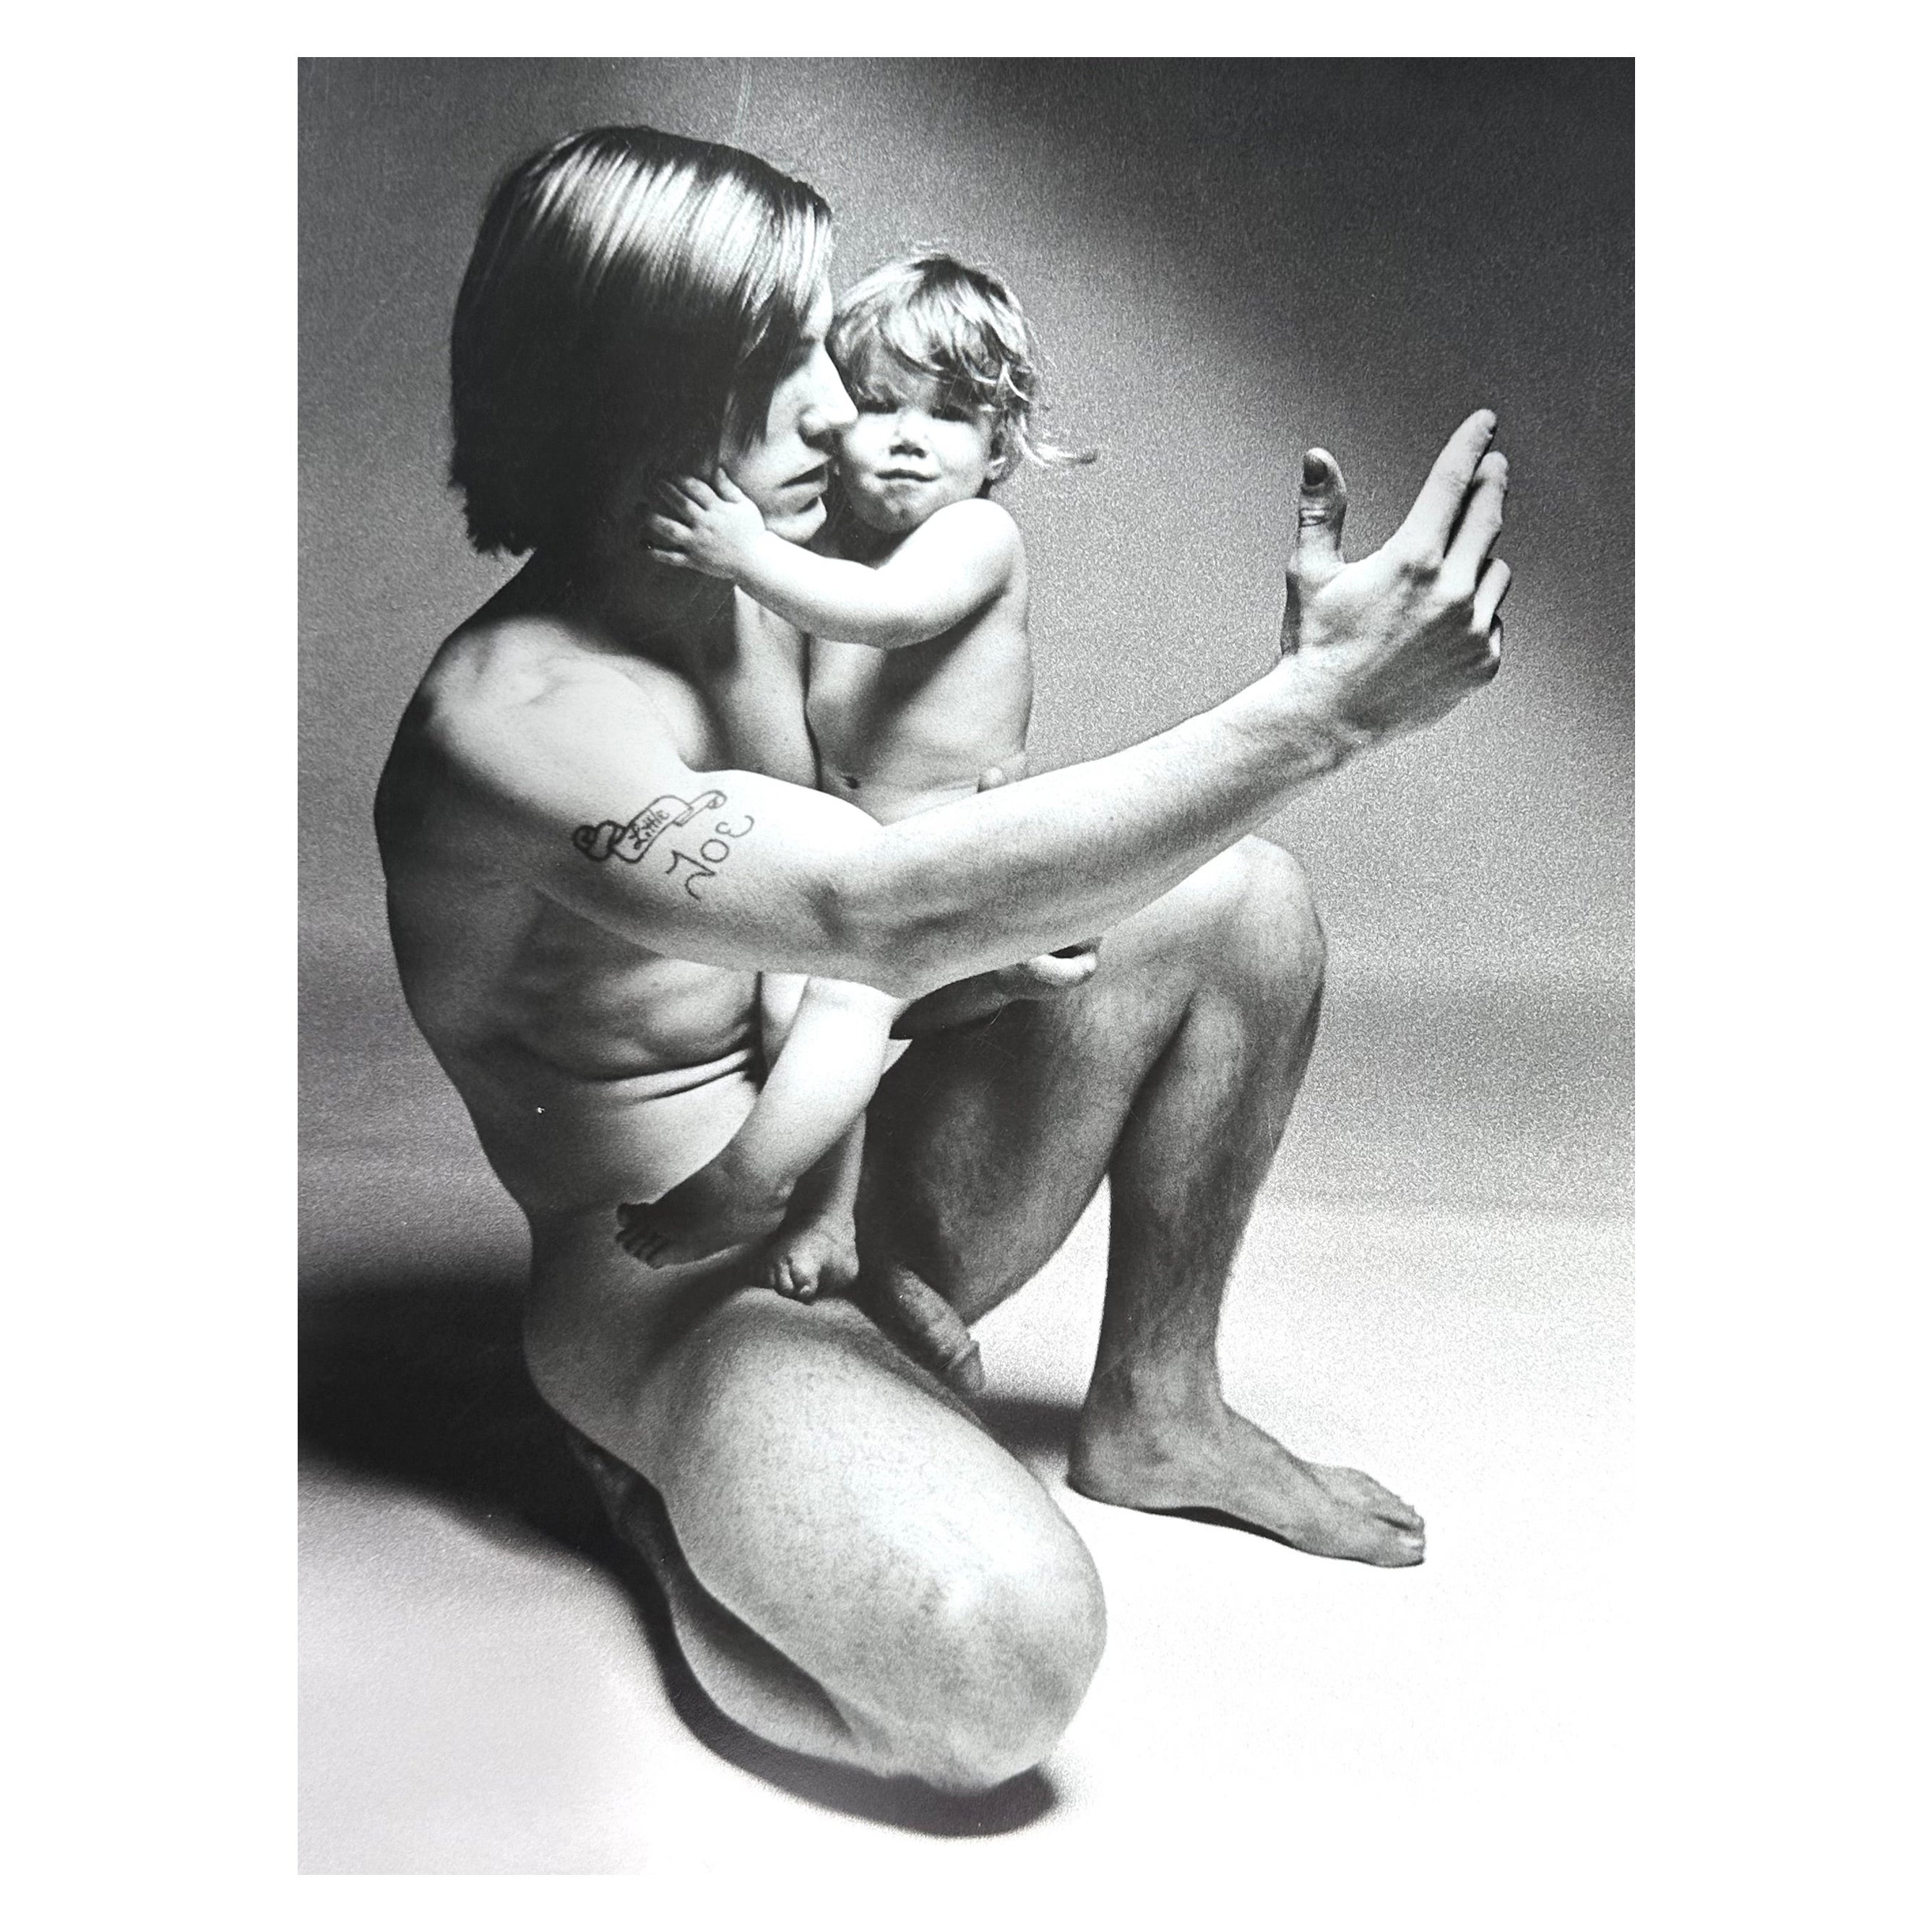 Francesco Scavullo, Andy Warhol's Flesh: Joe Dallesandro with Child I, 1968. 